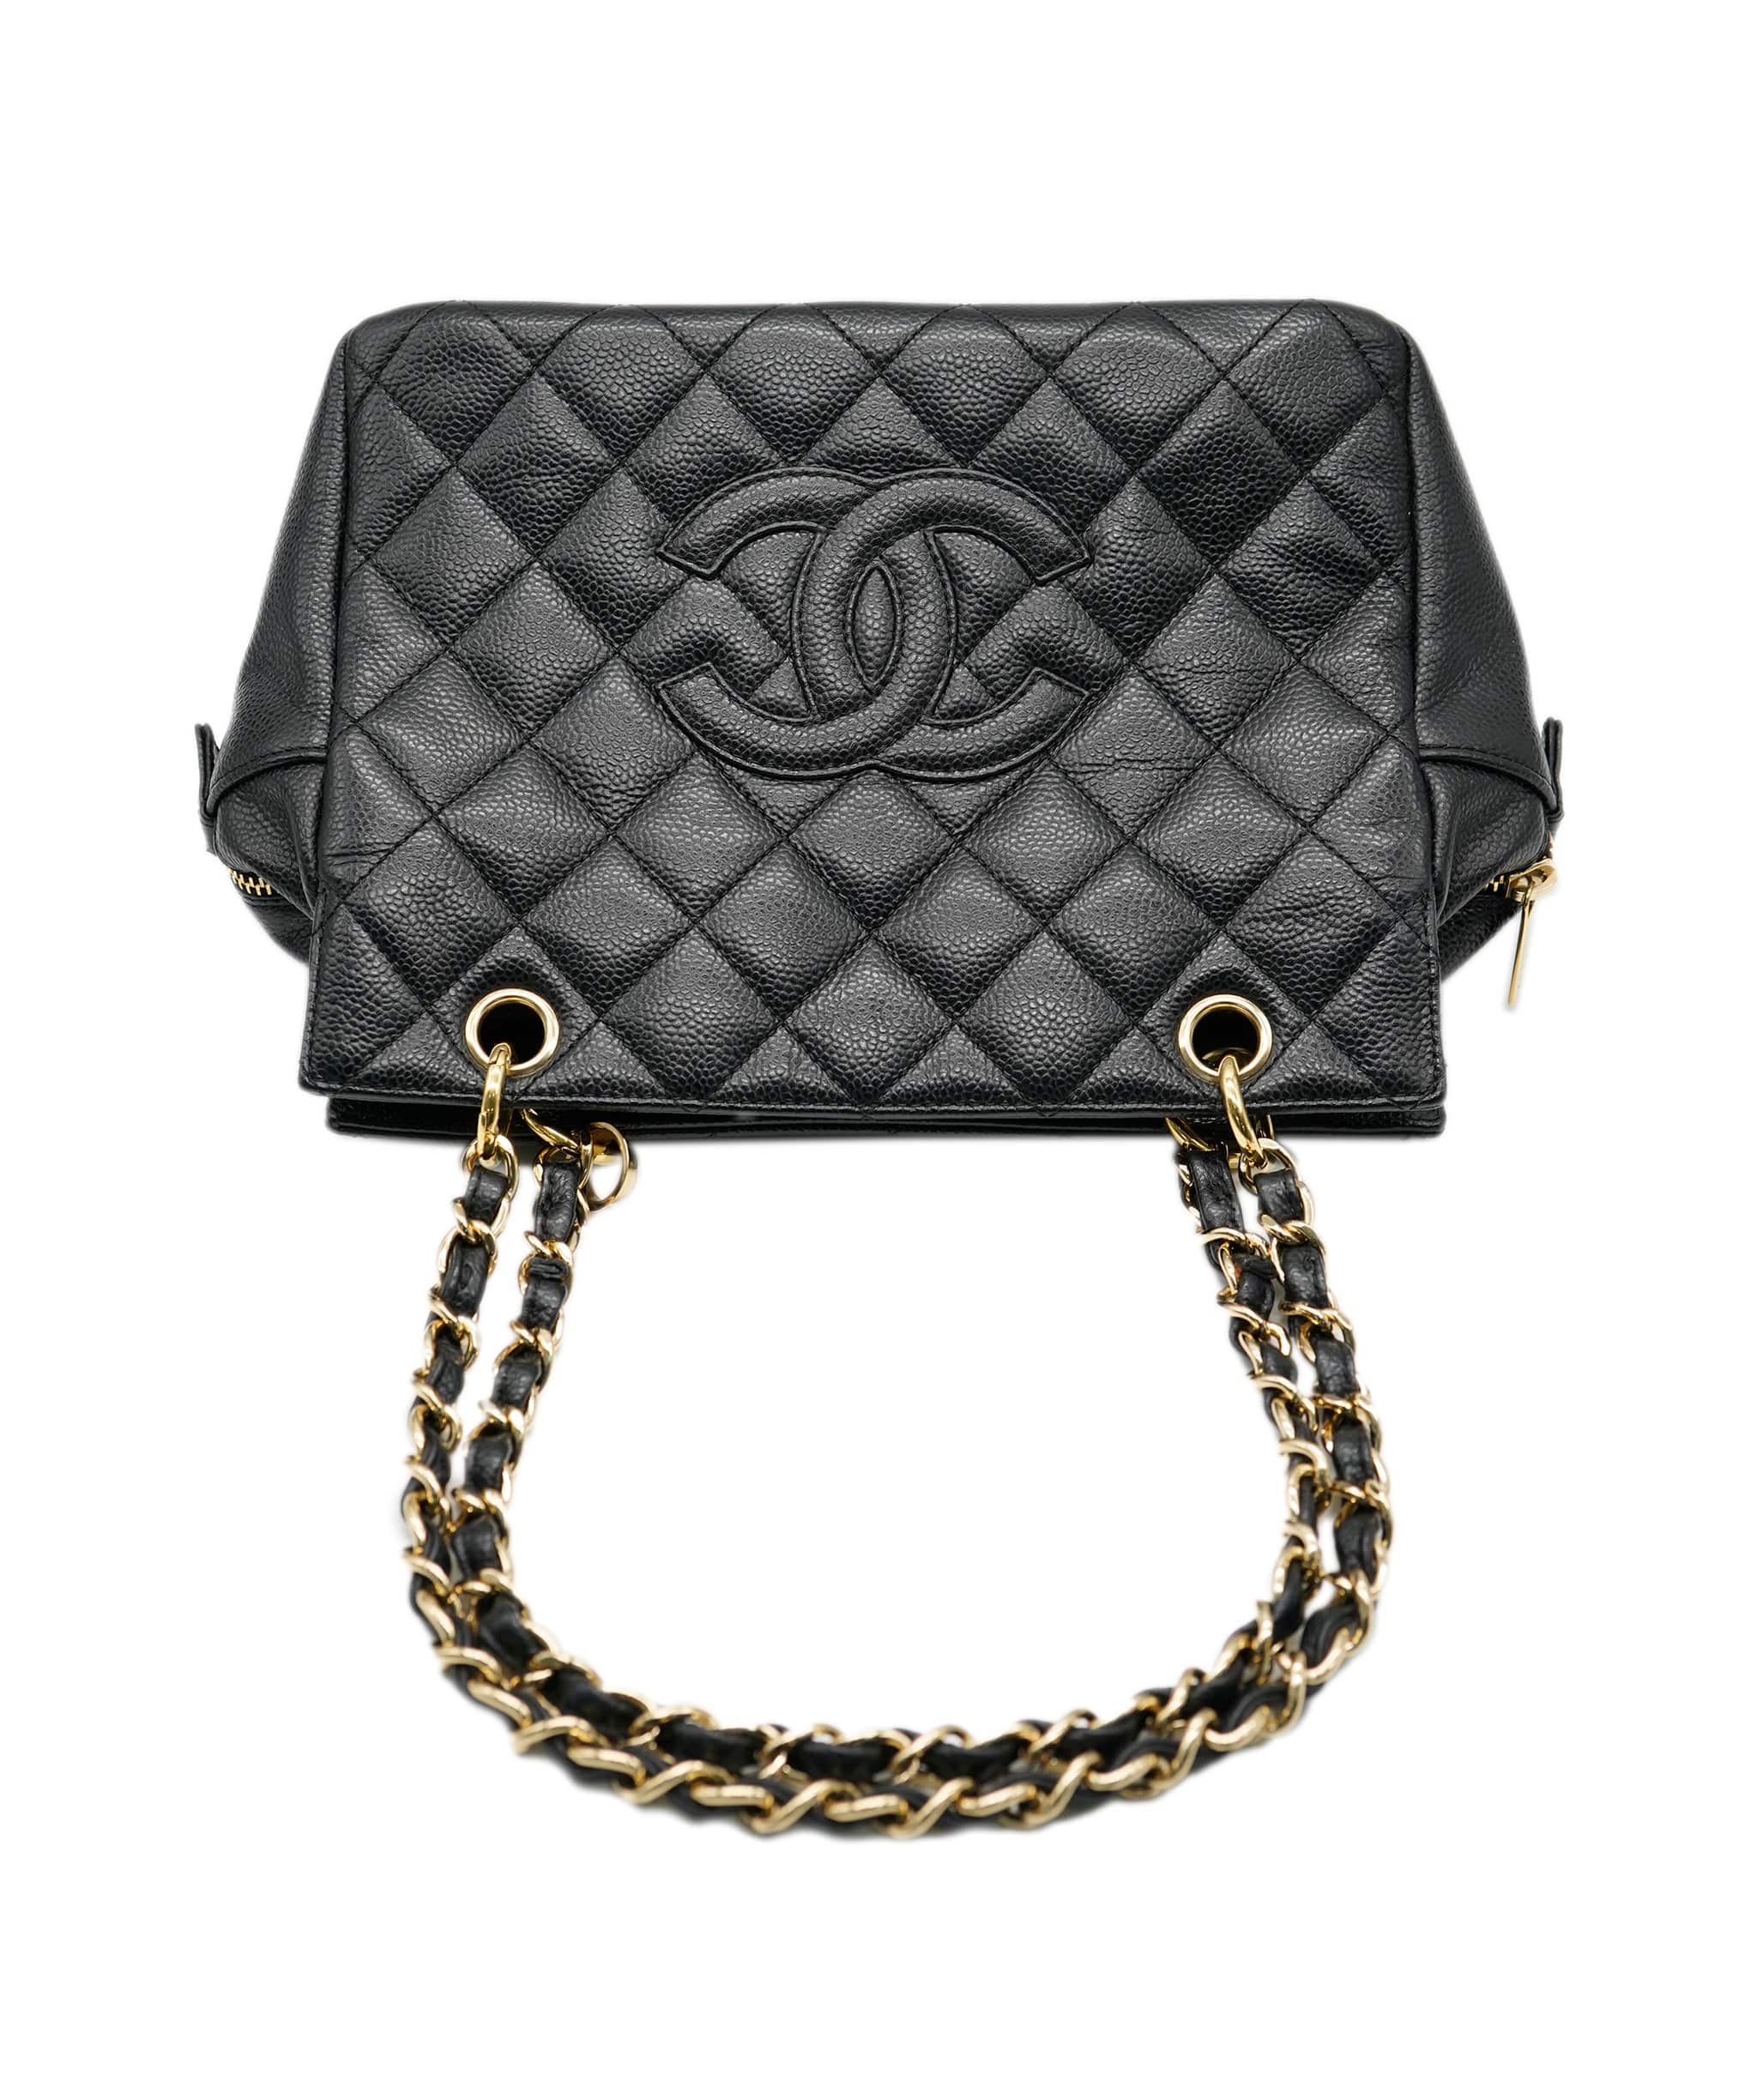 Chanel Chanel petite timeless tote bag - AJC0391